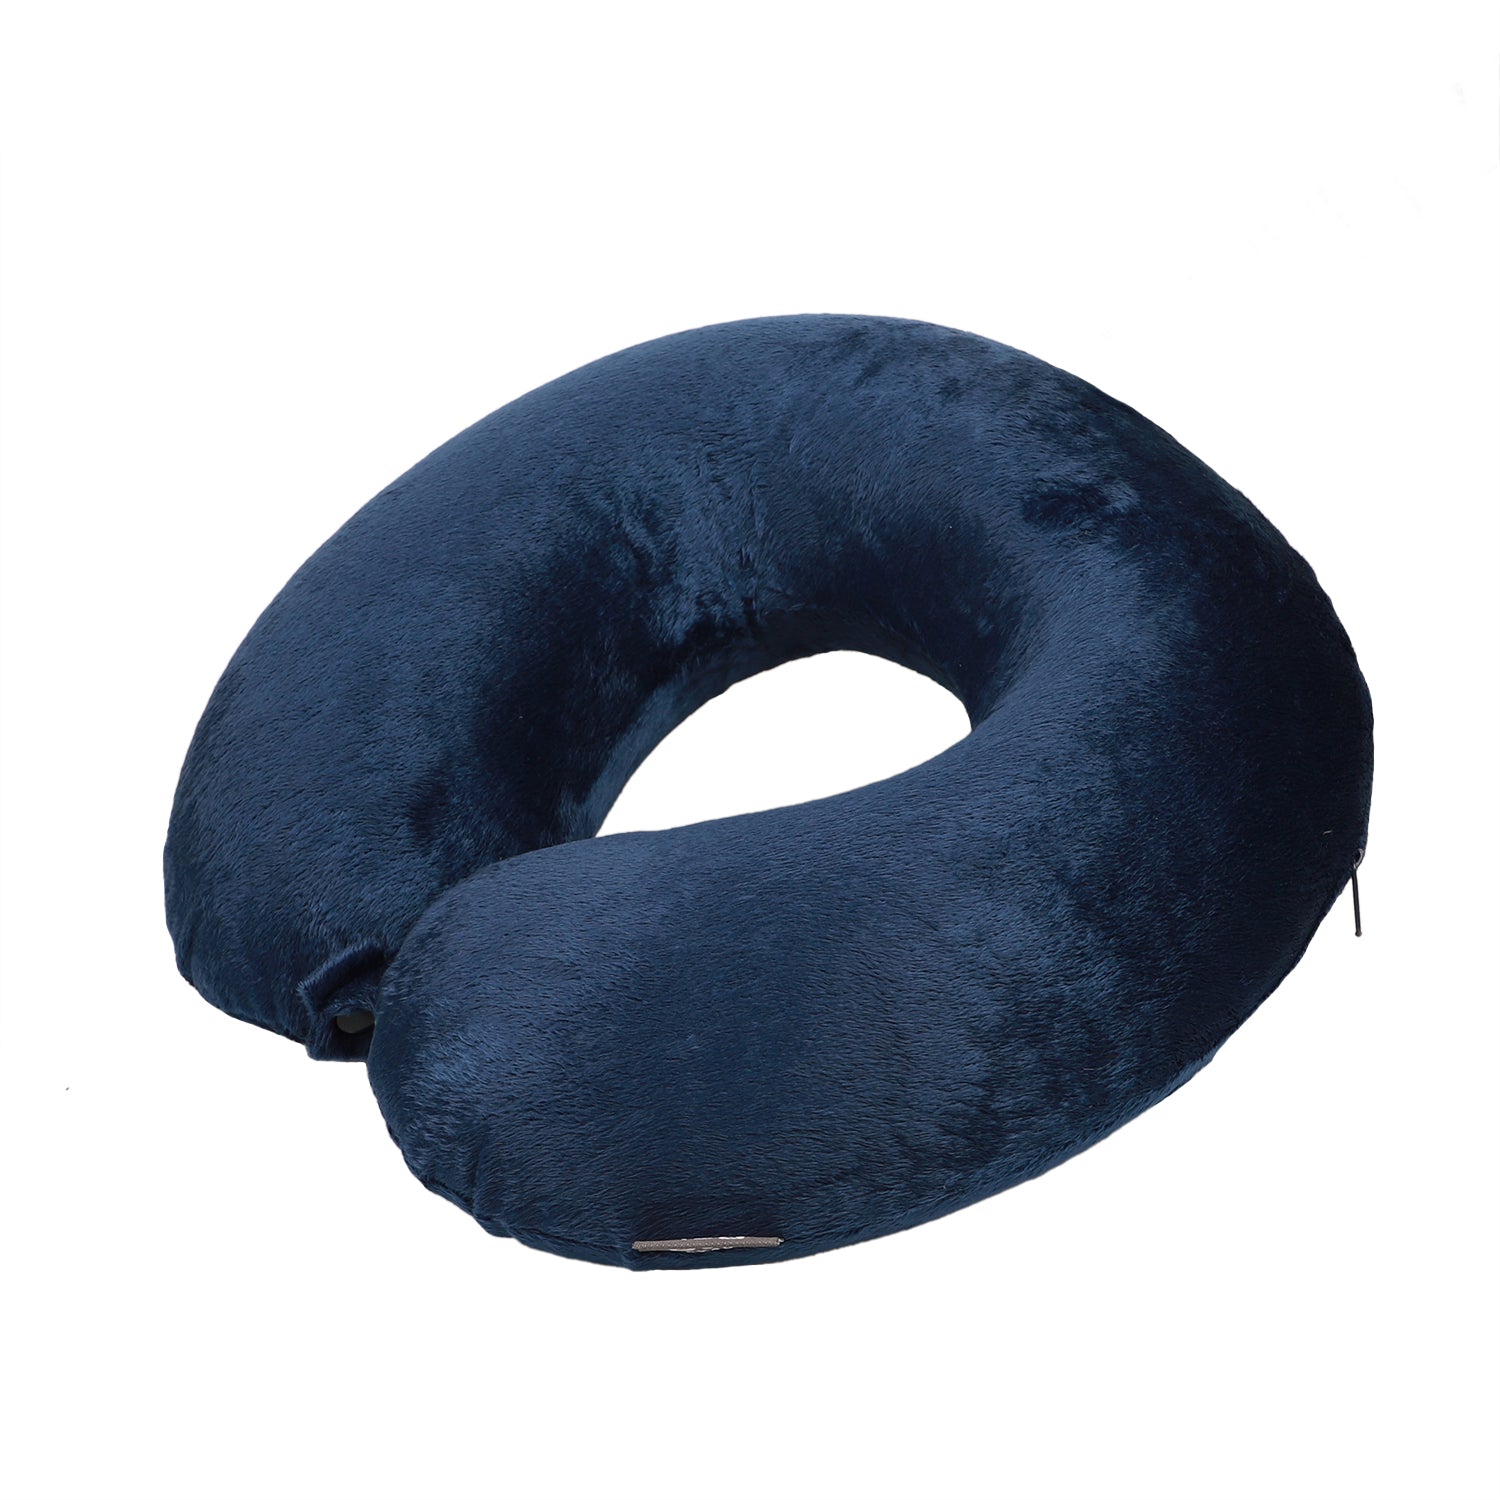 Buy Travel Blue Navy Memory Foam Neck Pillow Online At Best Price